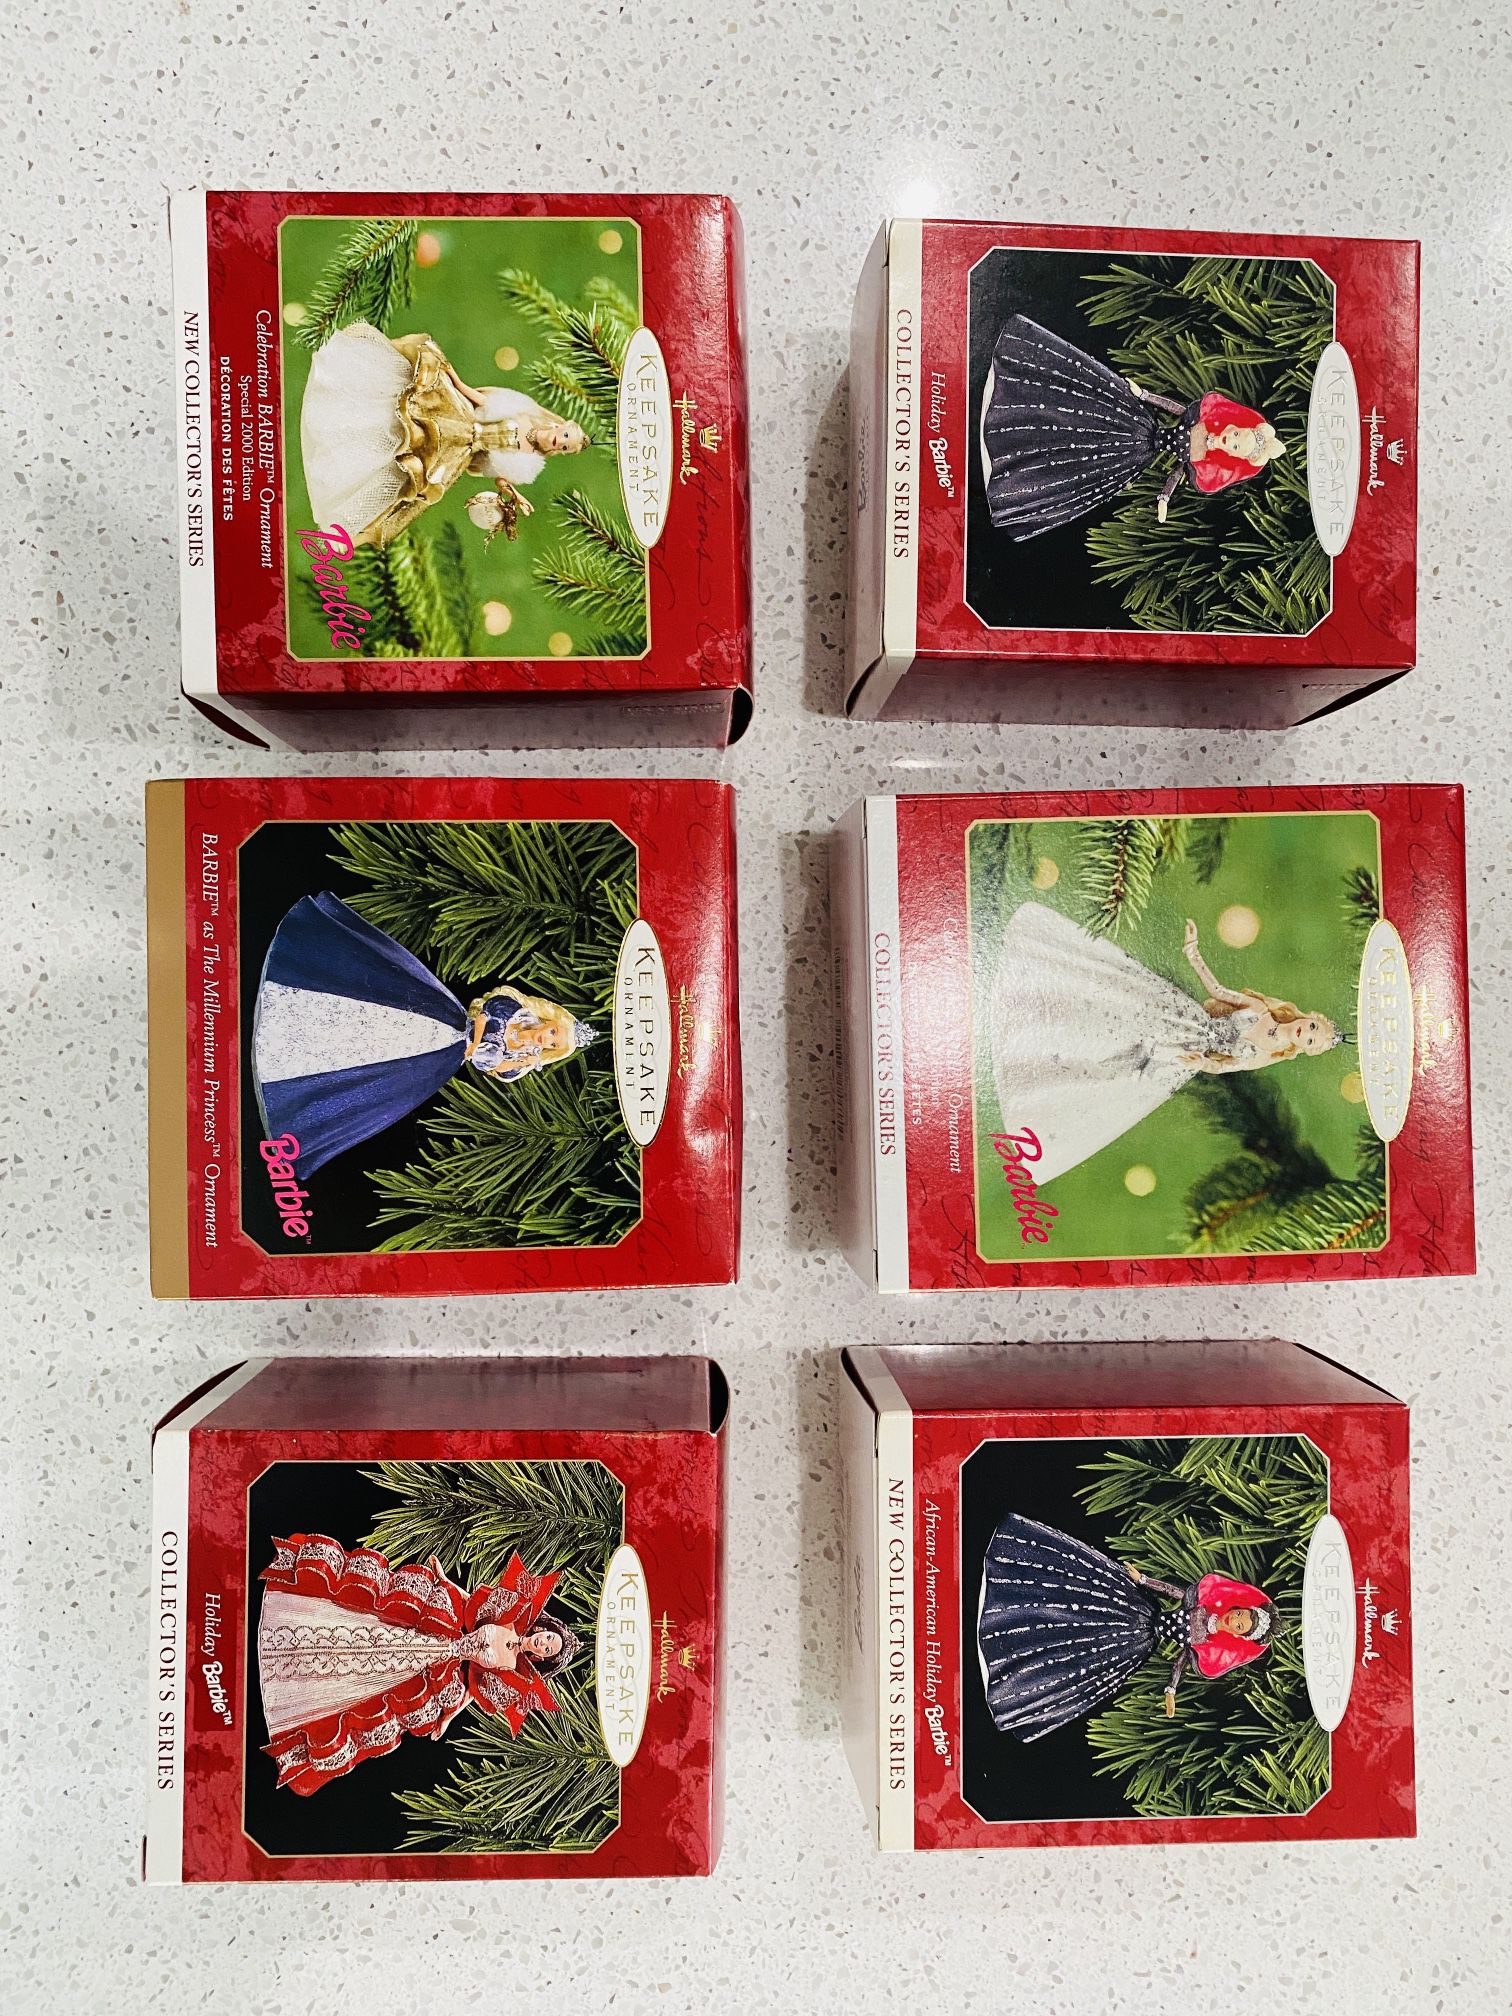 Barbie Keepsake Ornament Collection